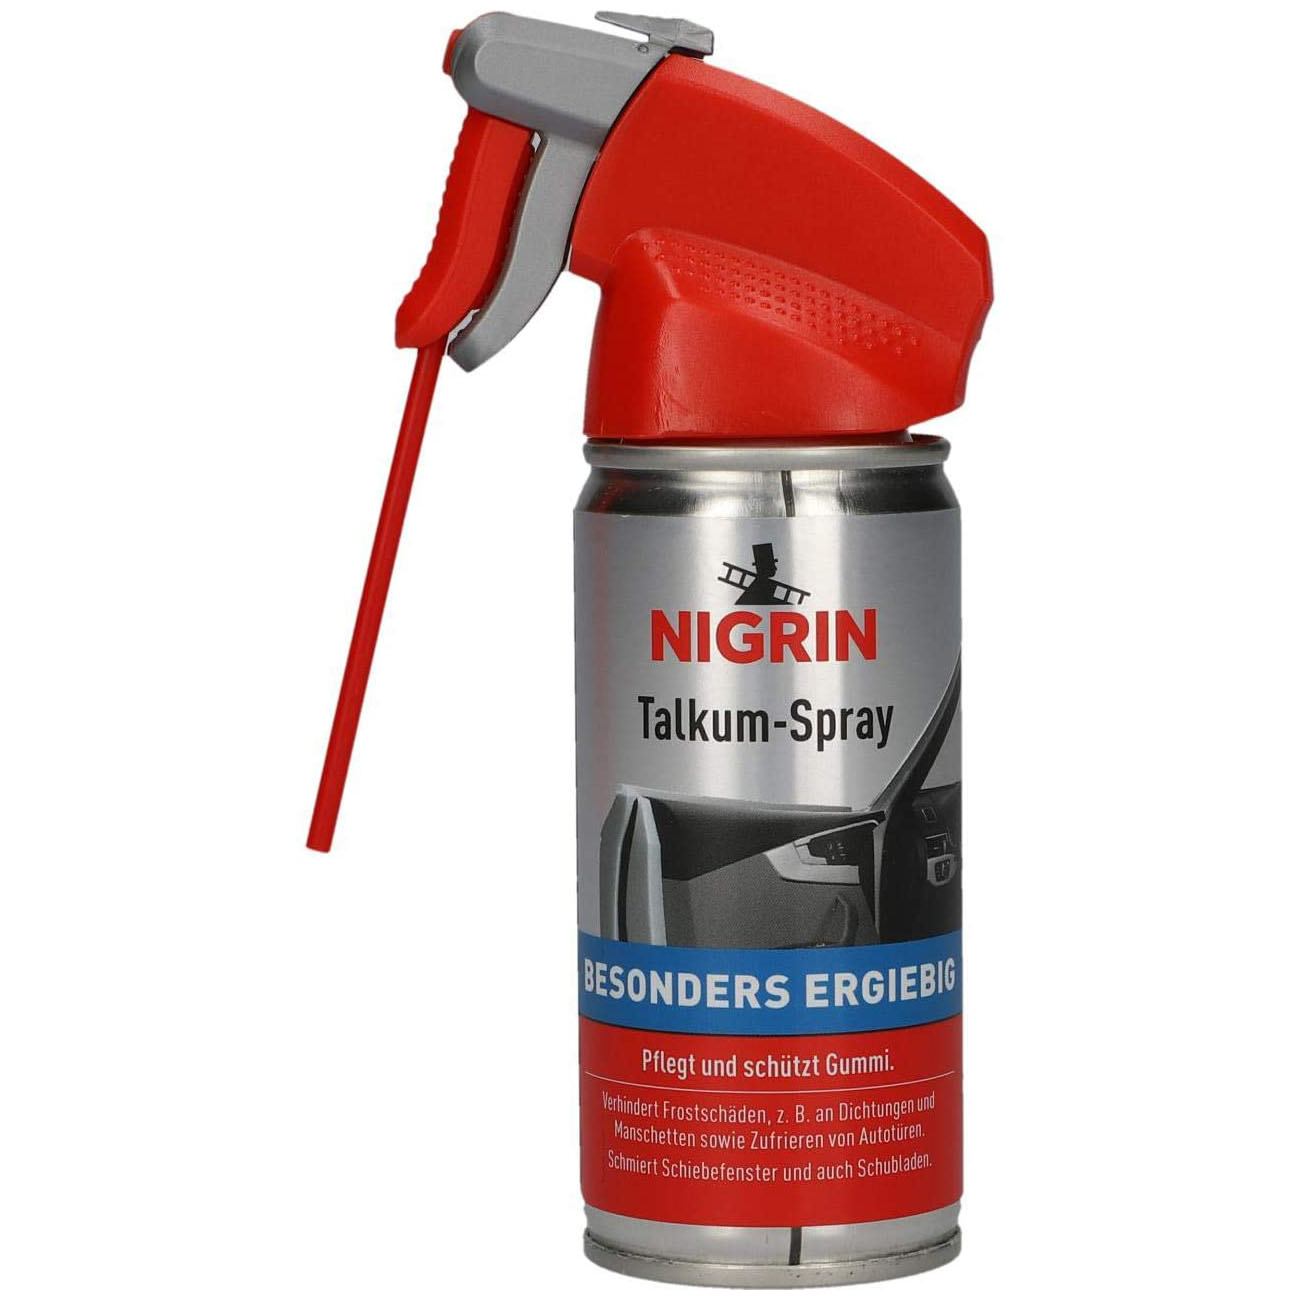 NIGRIN Talkum-Spray Gummi Plege, 100 ml